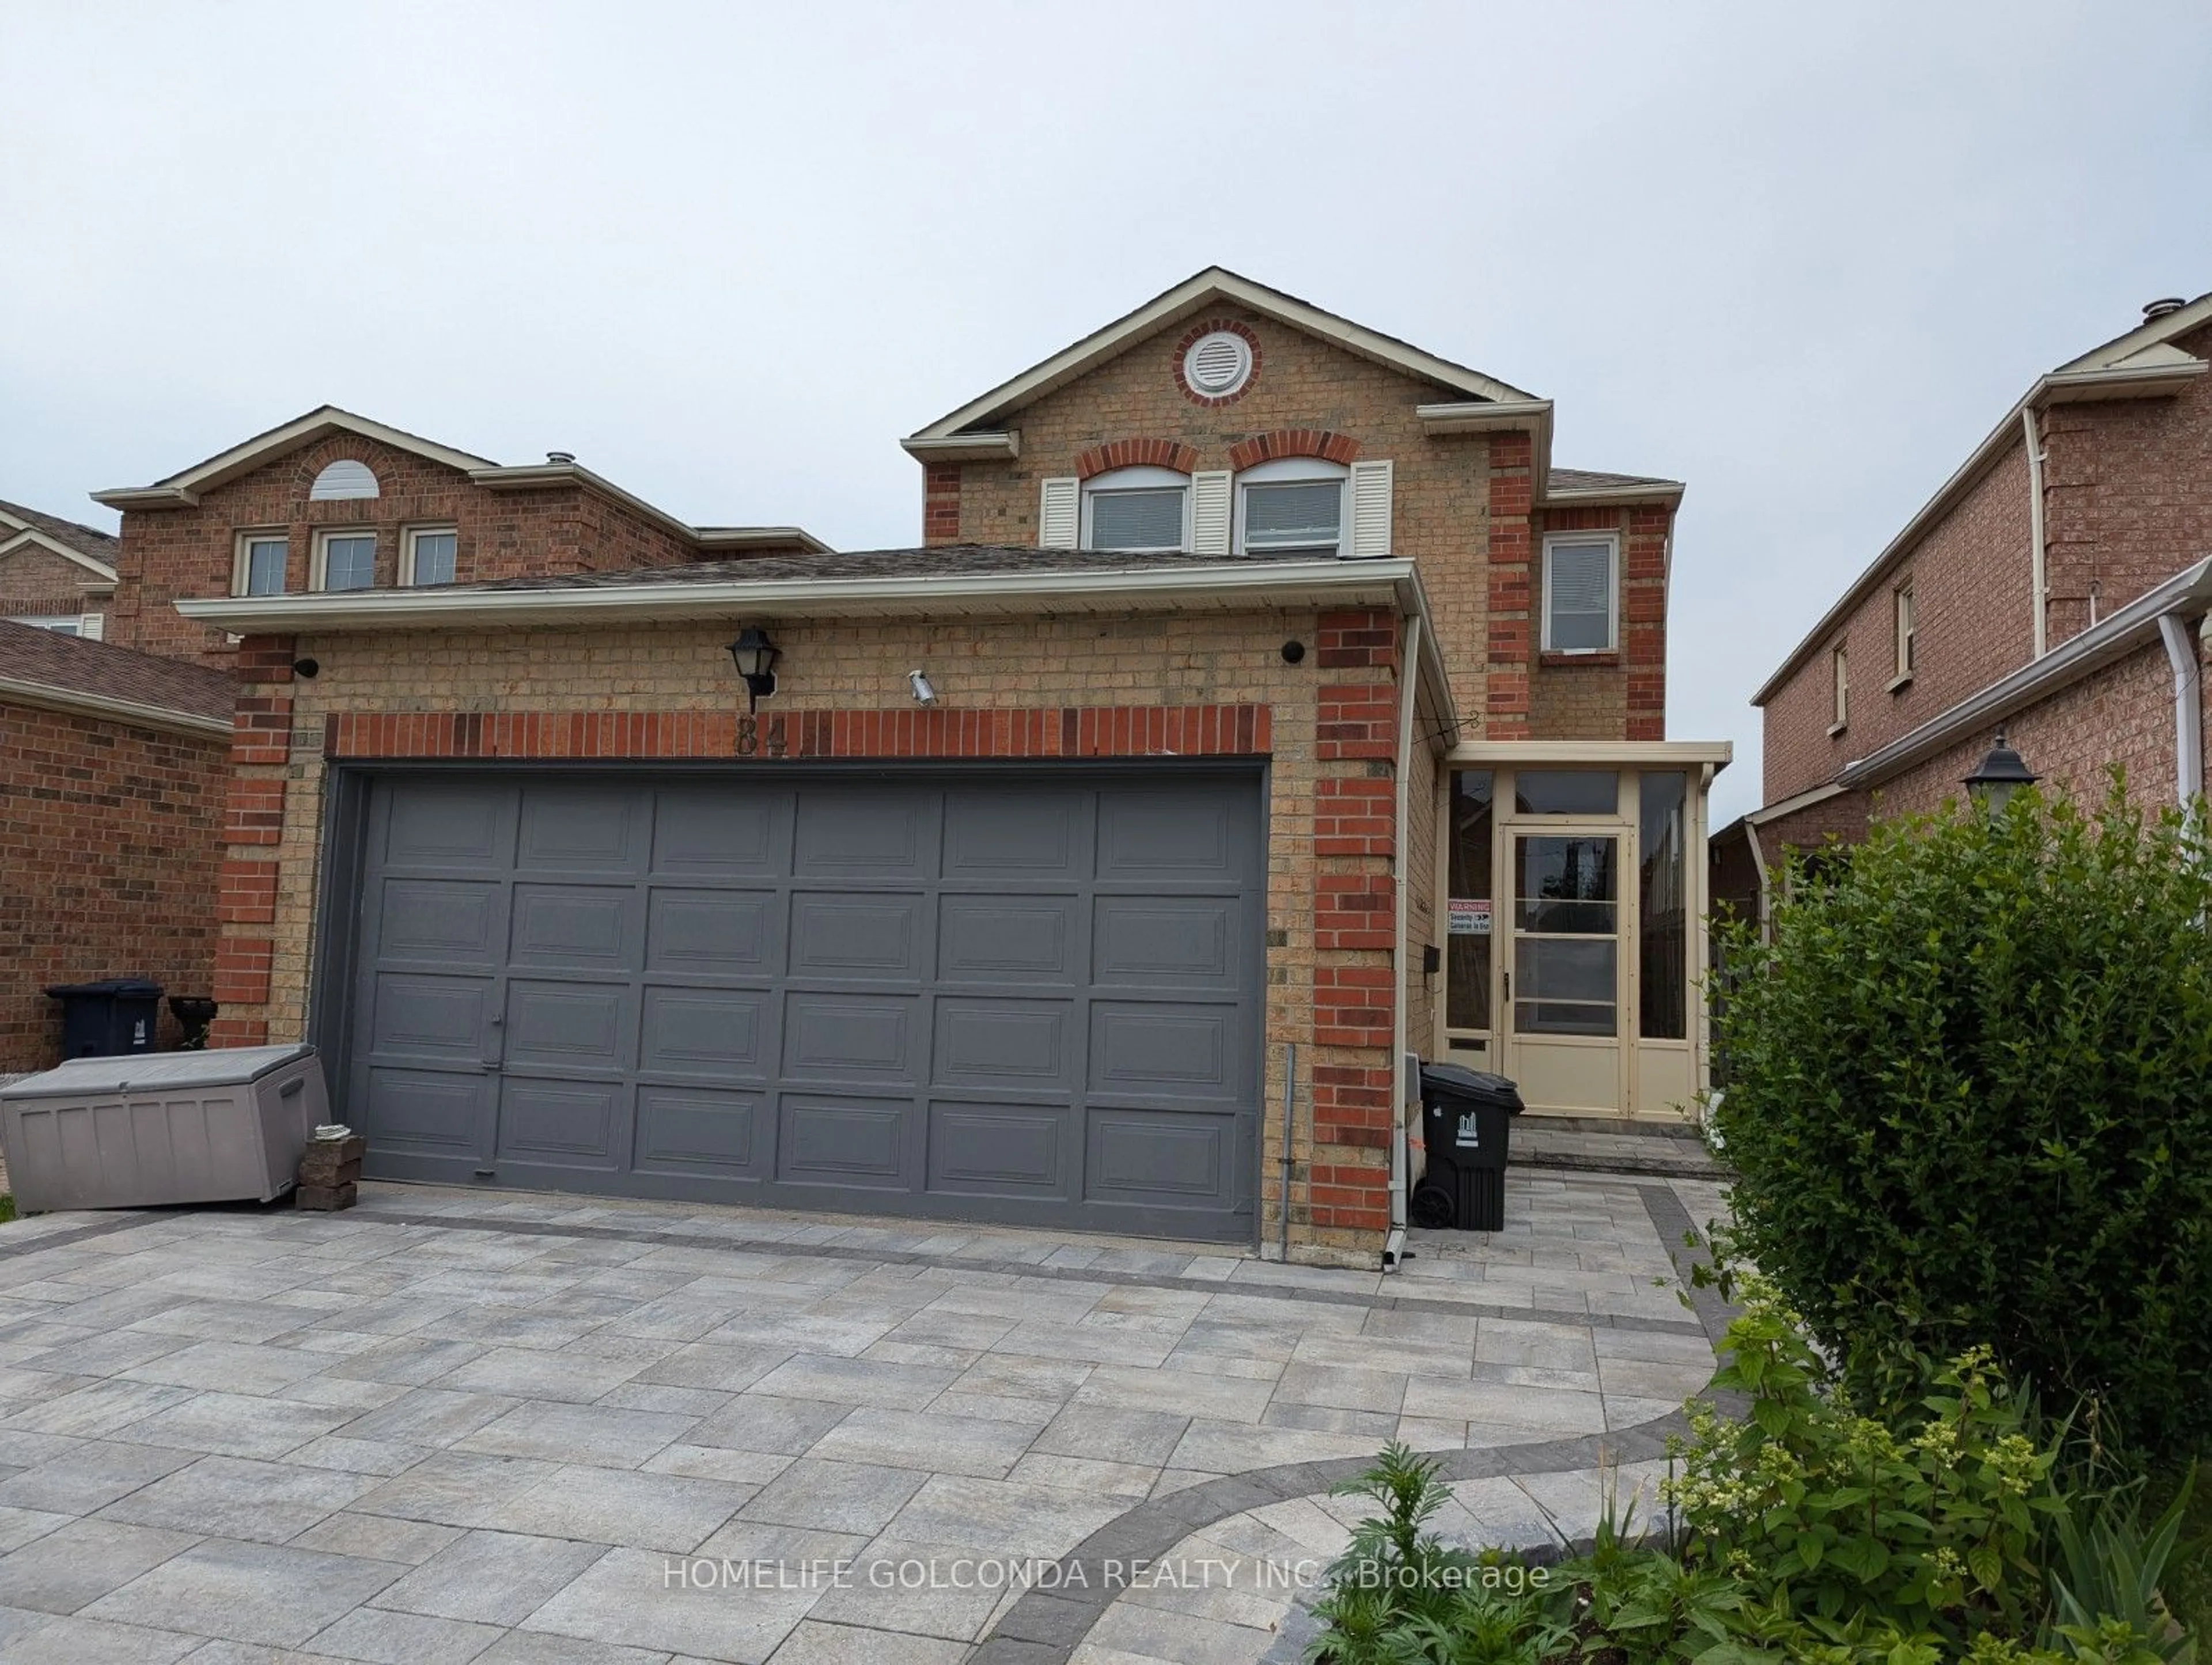 Home with brick exterior material for 84 Elmfield Cres, Toronto Ontario M1V 2Y6